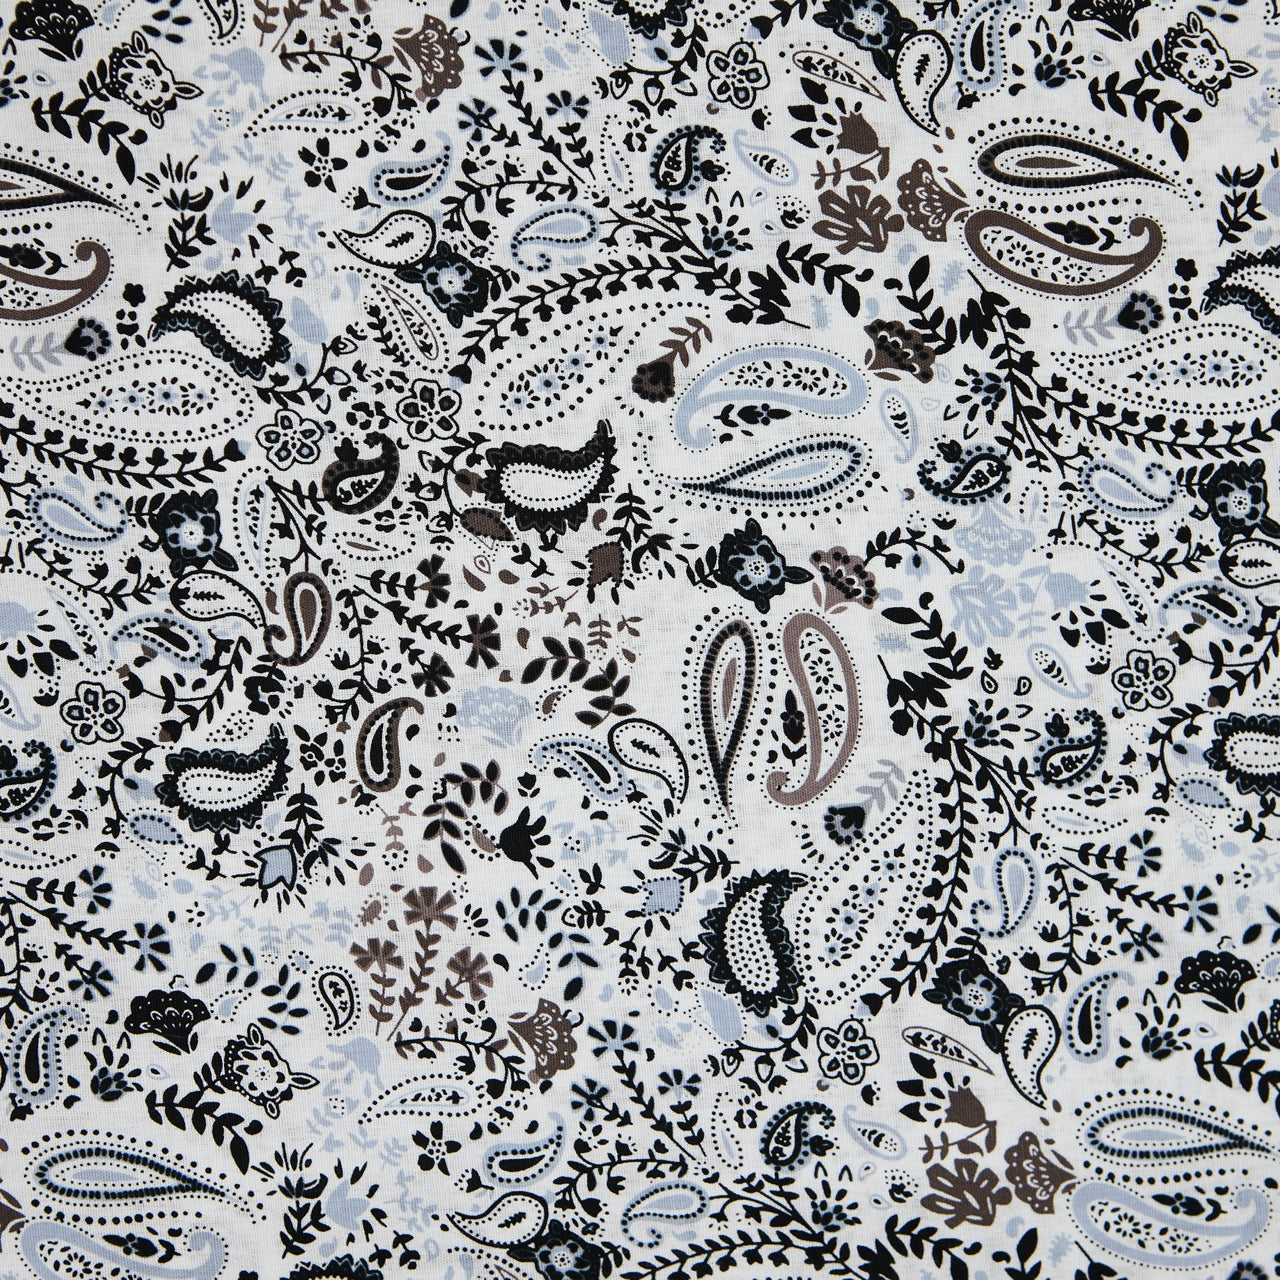 Cotton Floral - Paisley # 1 - White (detail)